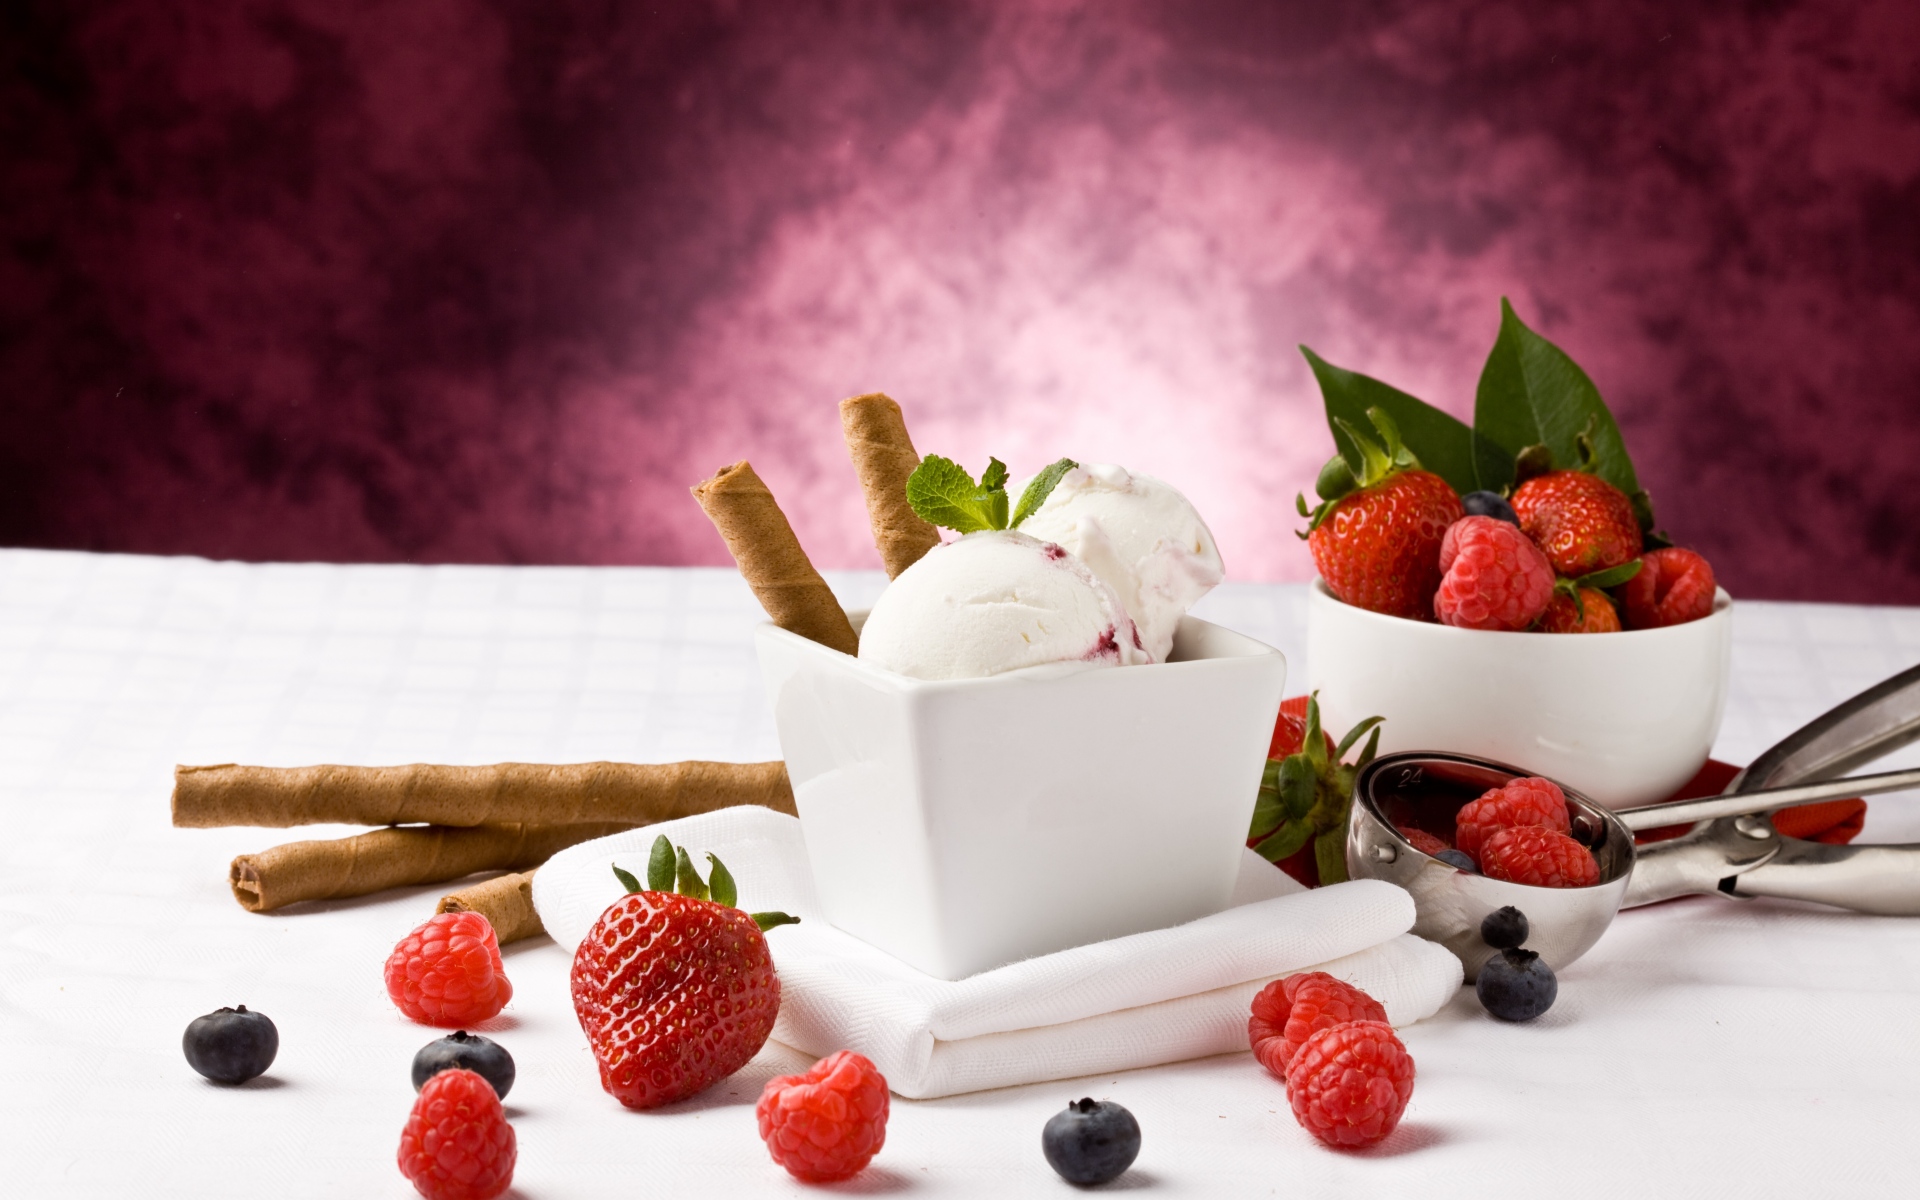 Картинки Мороженое, трубочки, ягода, клубника, малина, милая девушка фото и обои на рабочий стол